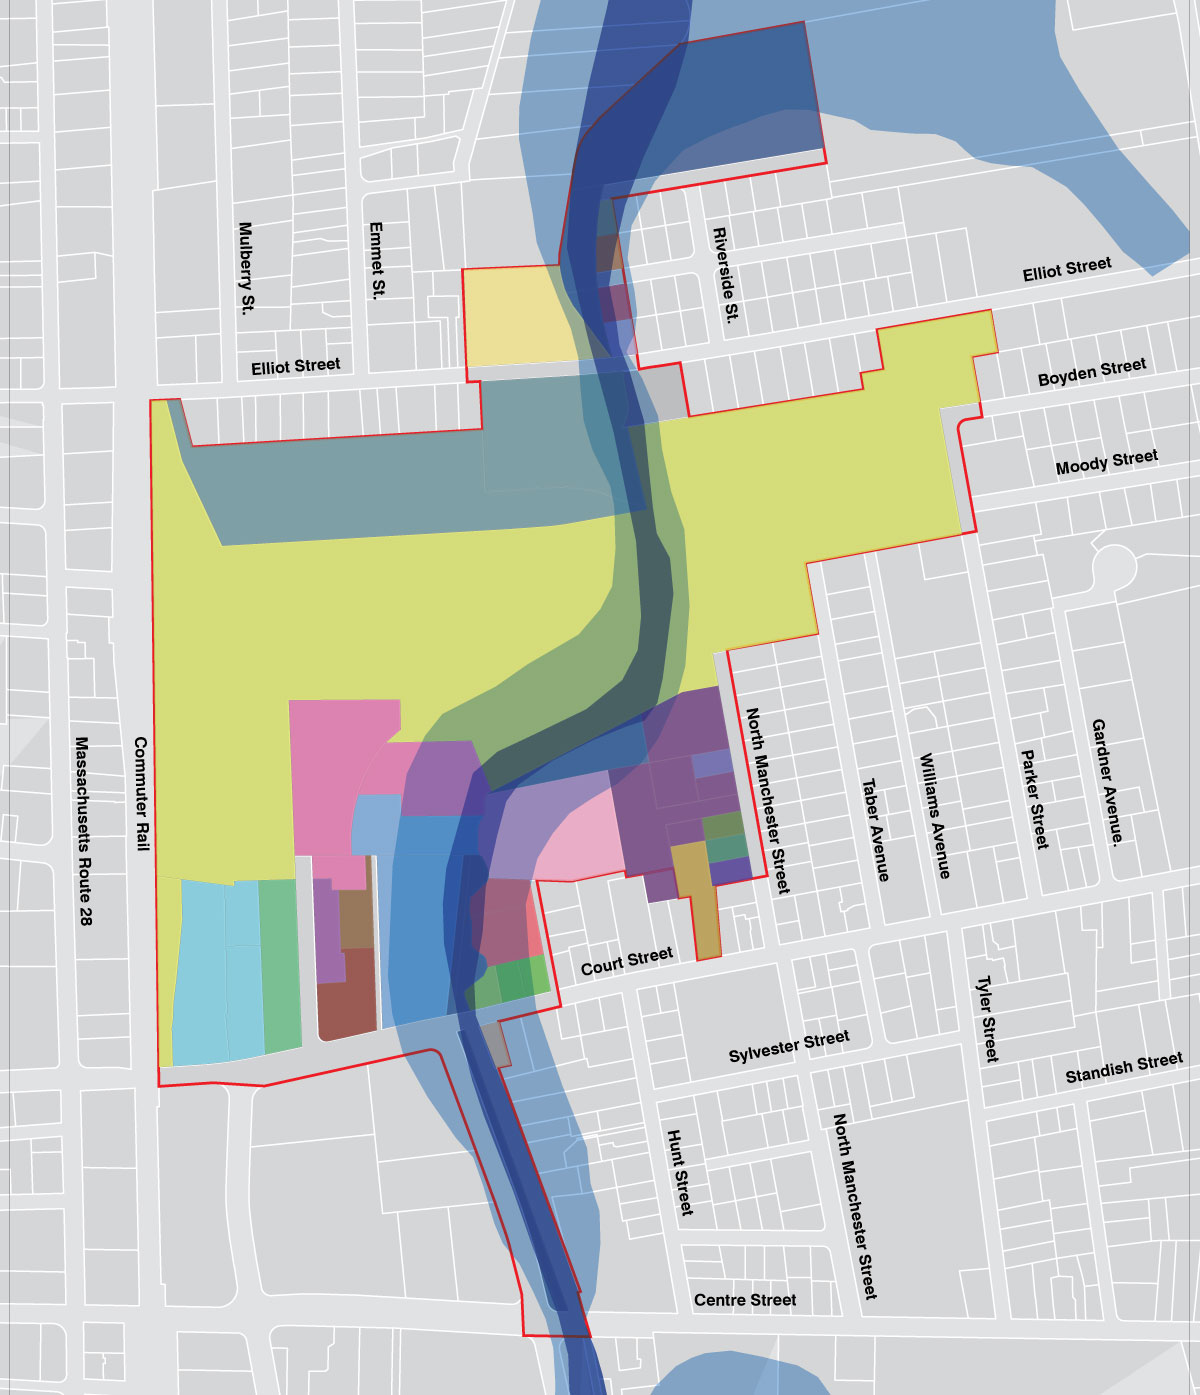 Brockton CSX site zoning and flood zones map